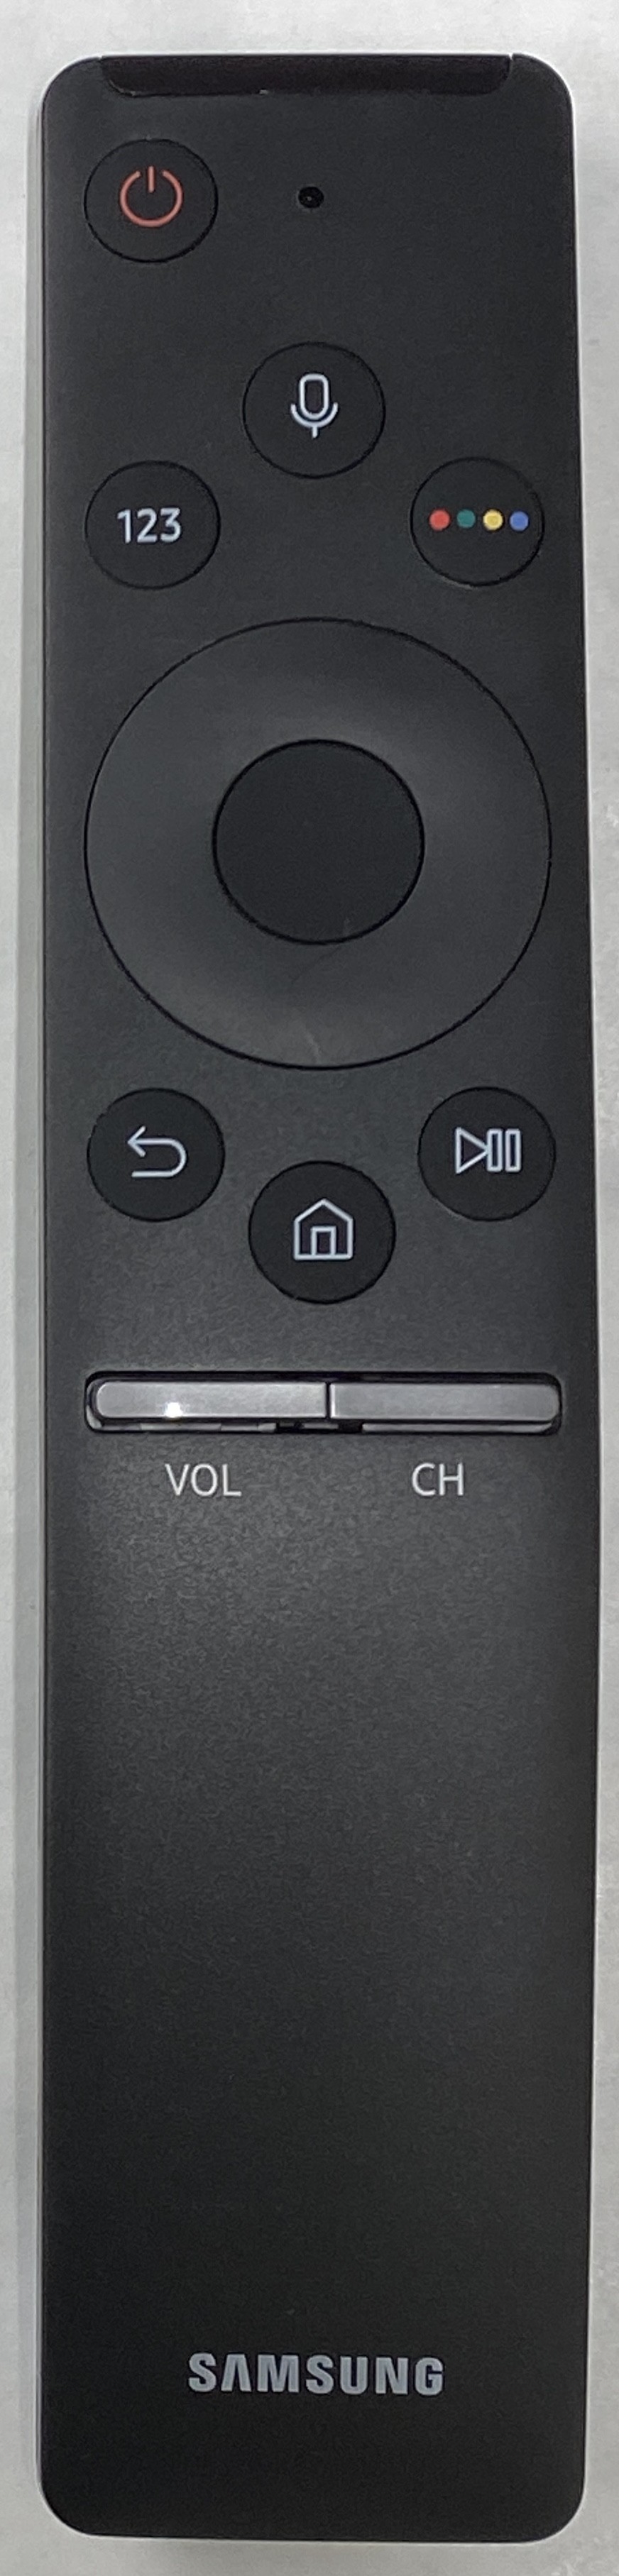 SAMSUNG UE40MU6100 Smart Remote Control Original